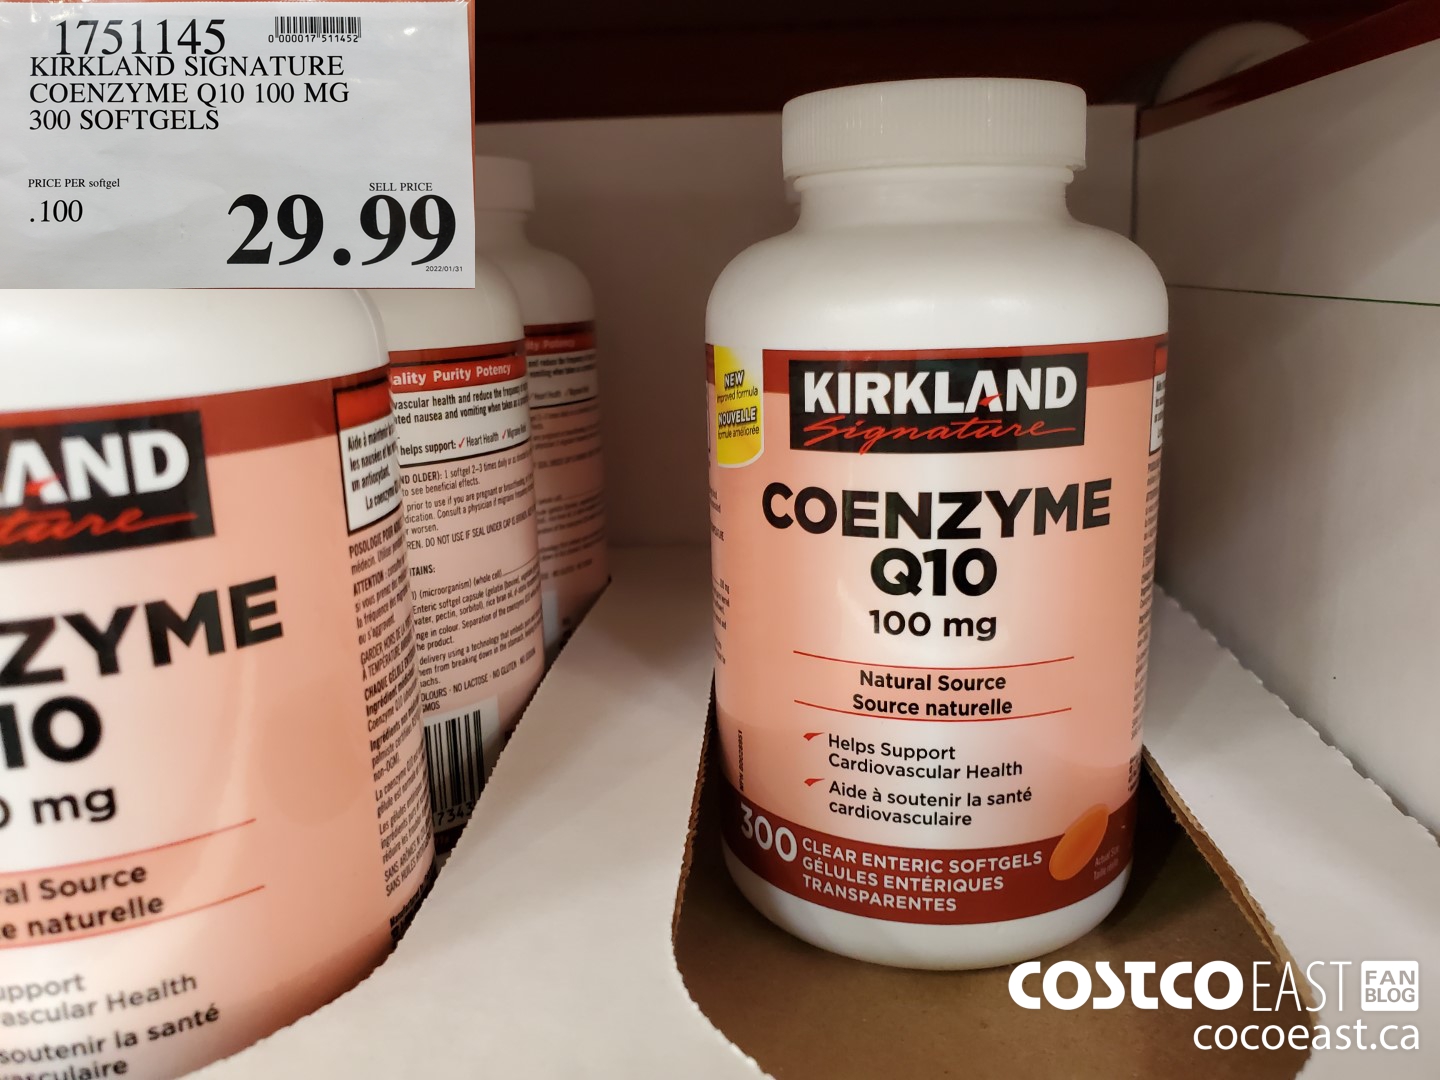 Kirkland Signature Coenzyme Q10 100 mg, 300 Clear Enteric Softgels